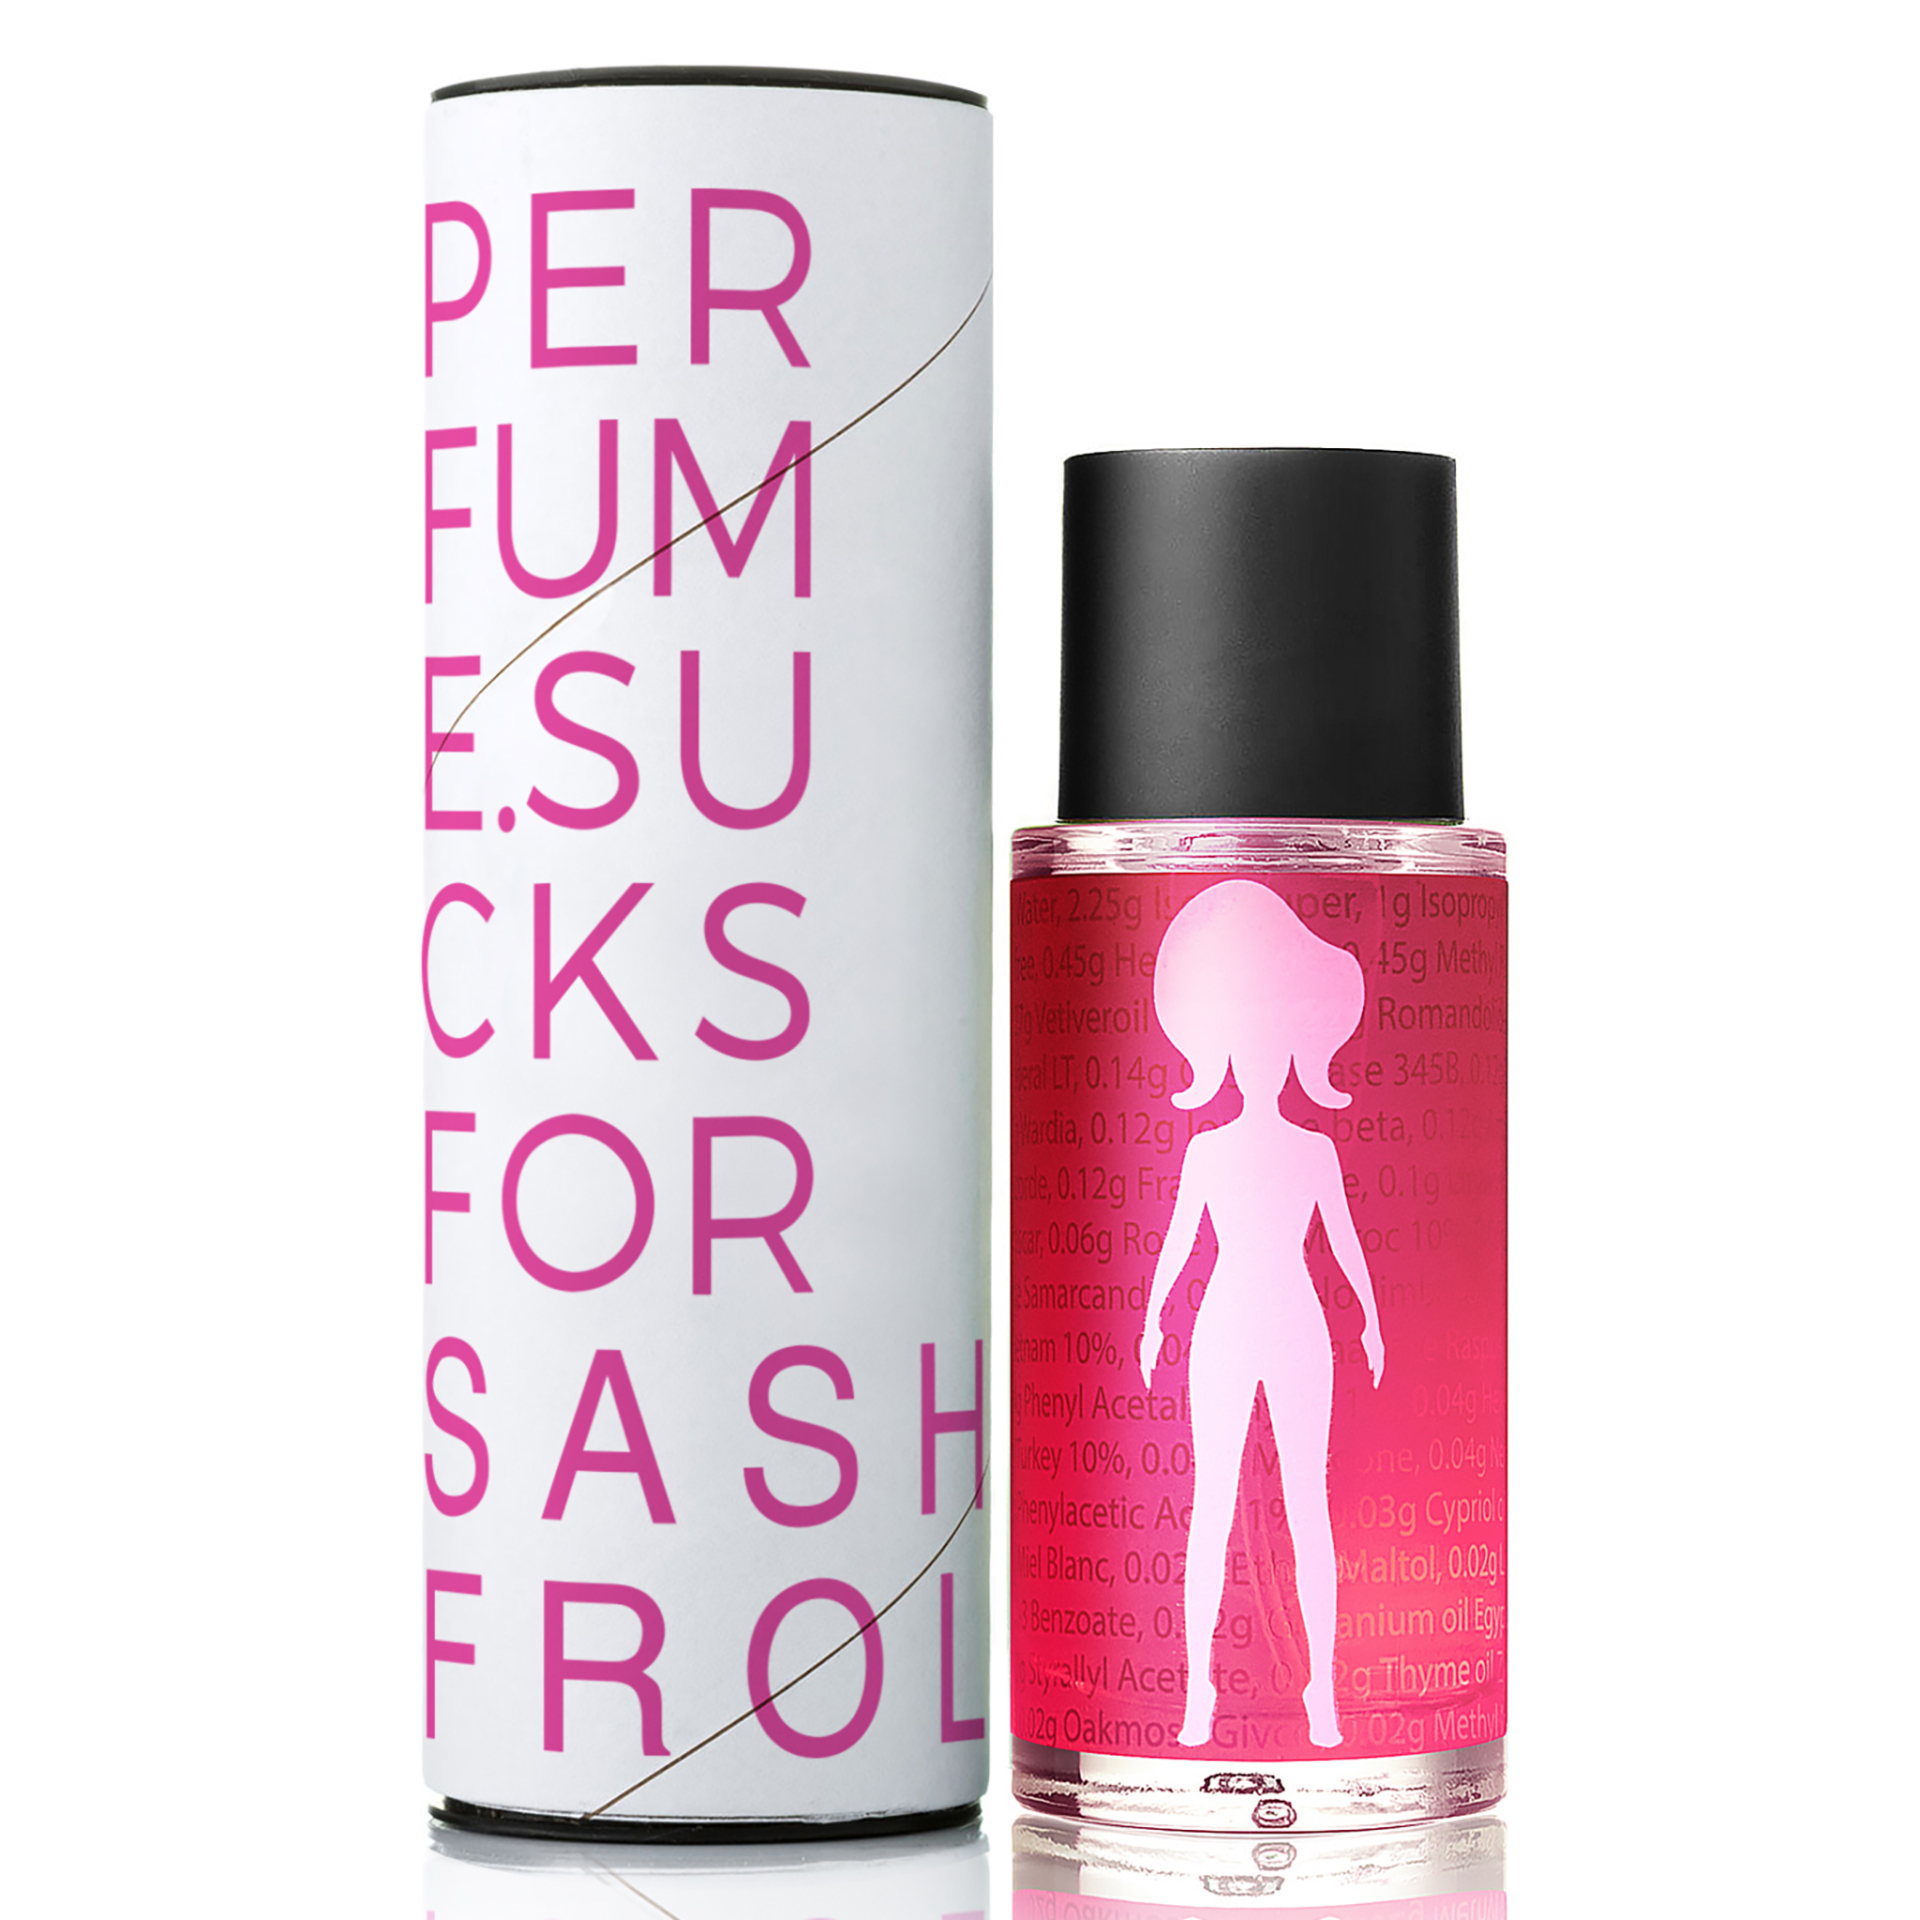 Perfume.Sucks Sasha Frolova x PS